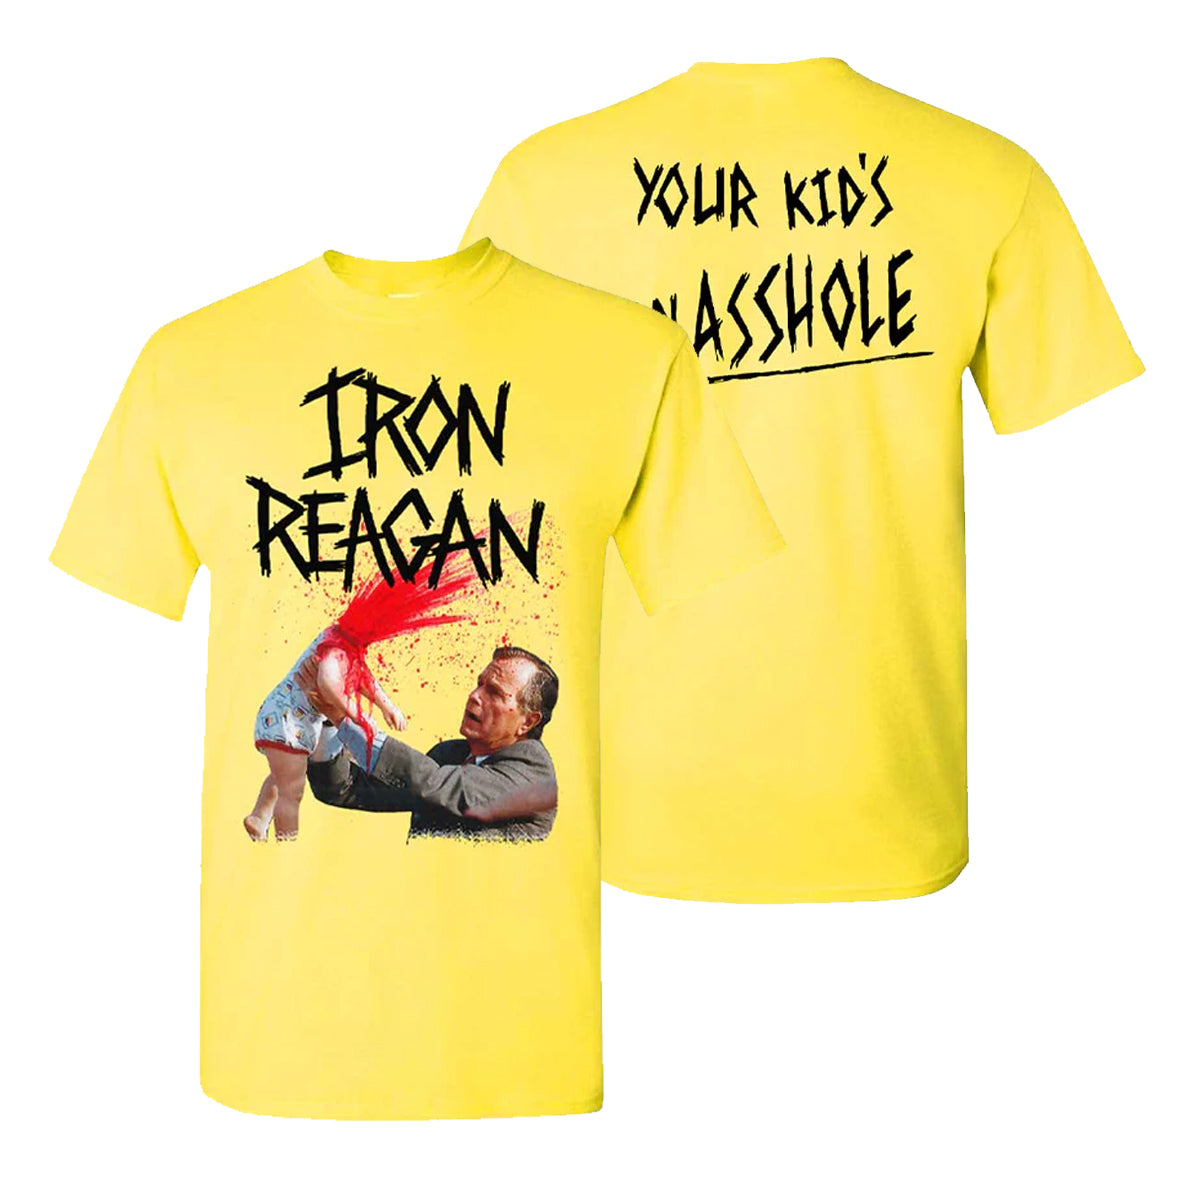 Your Kid's an Asshole Yellow T-Shirt